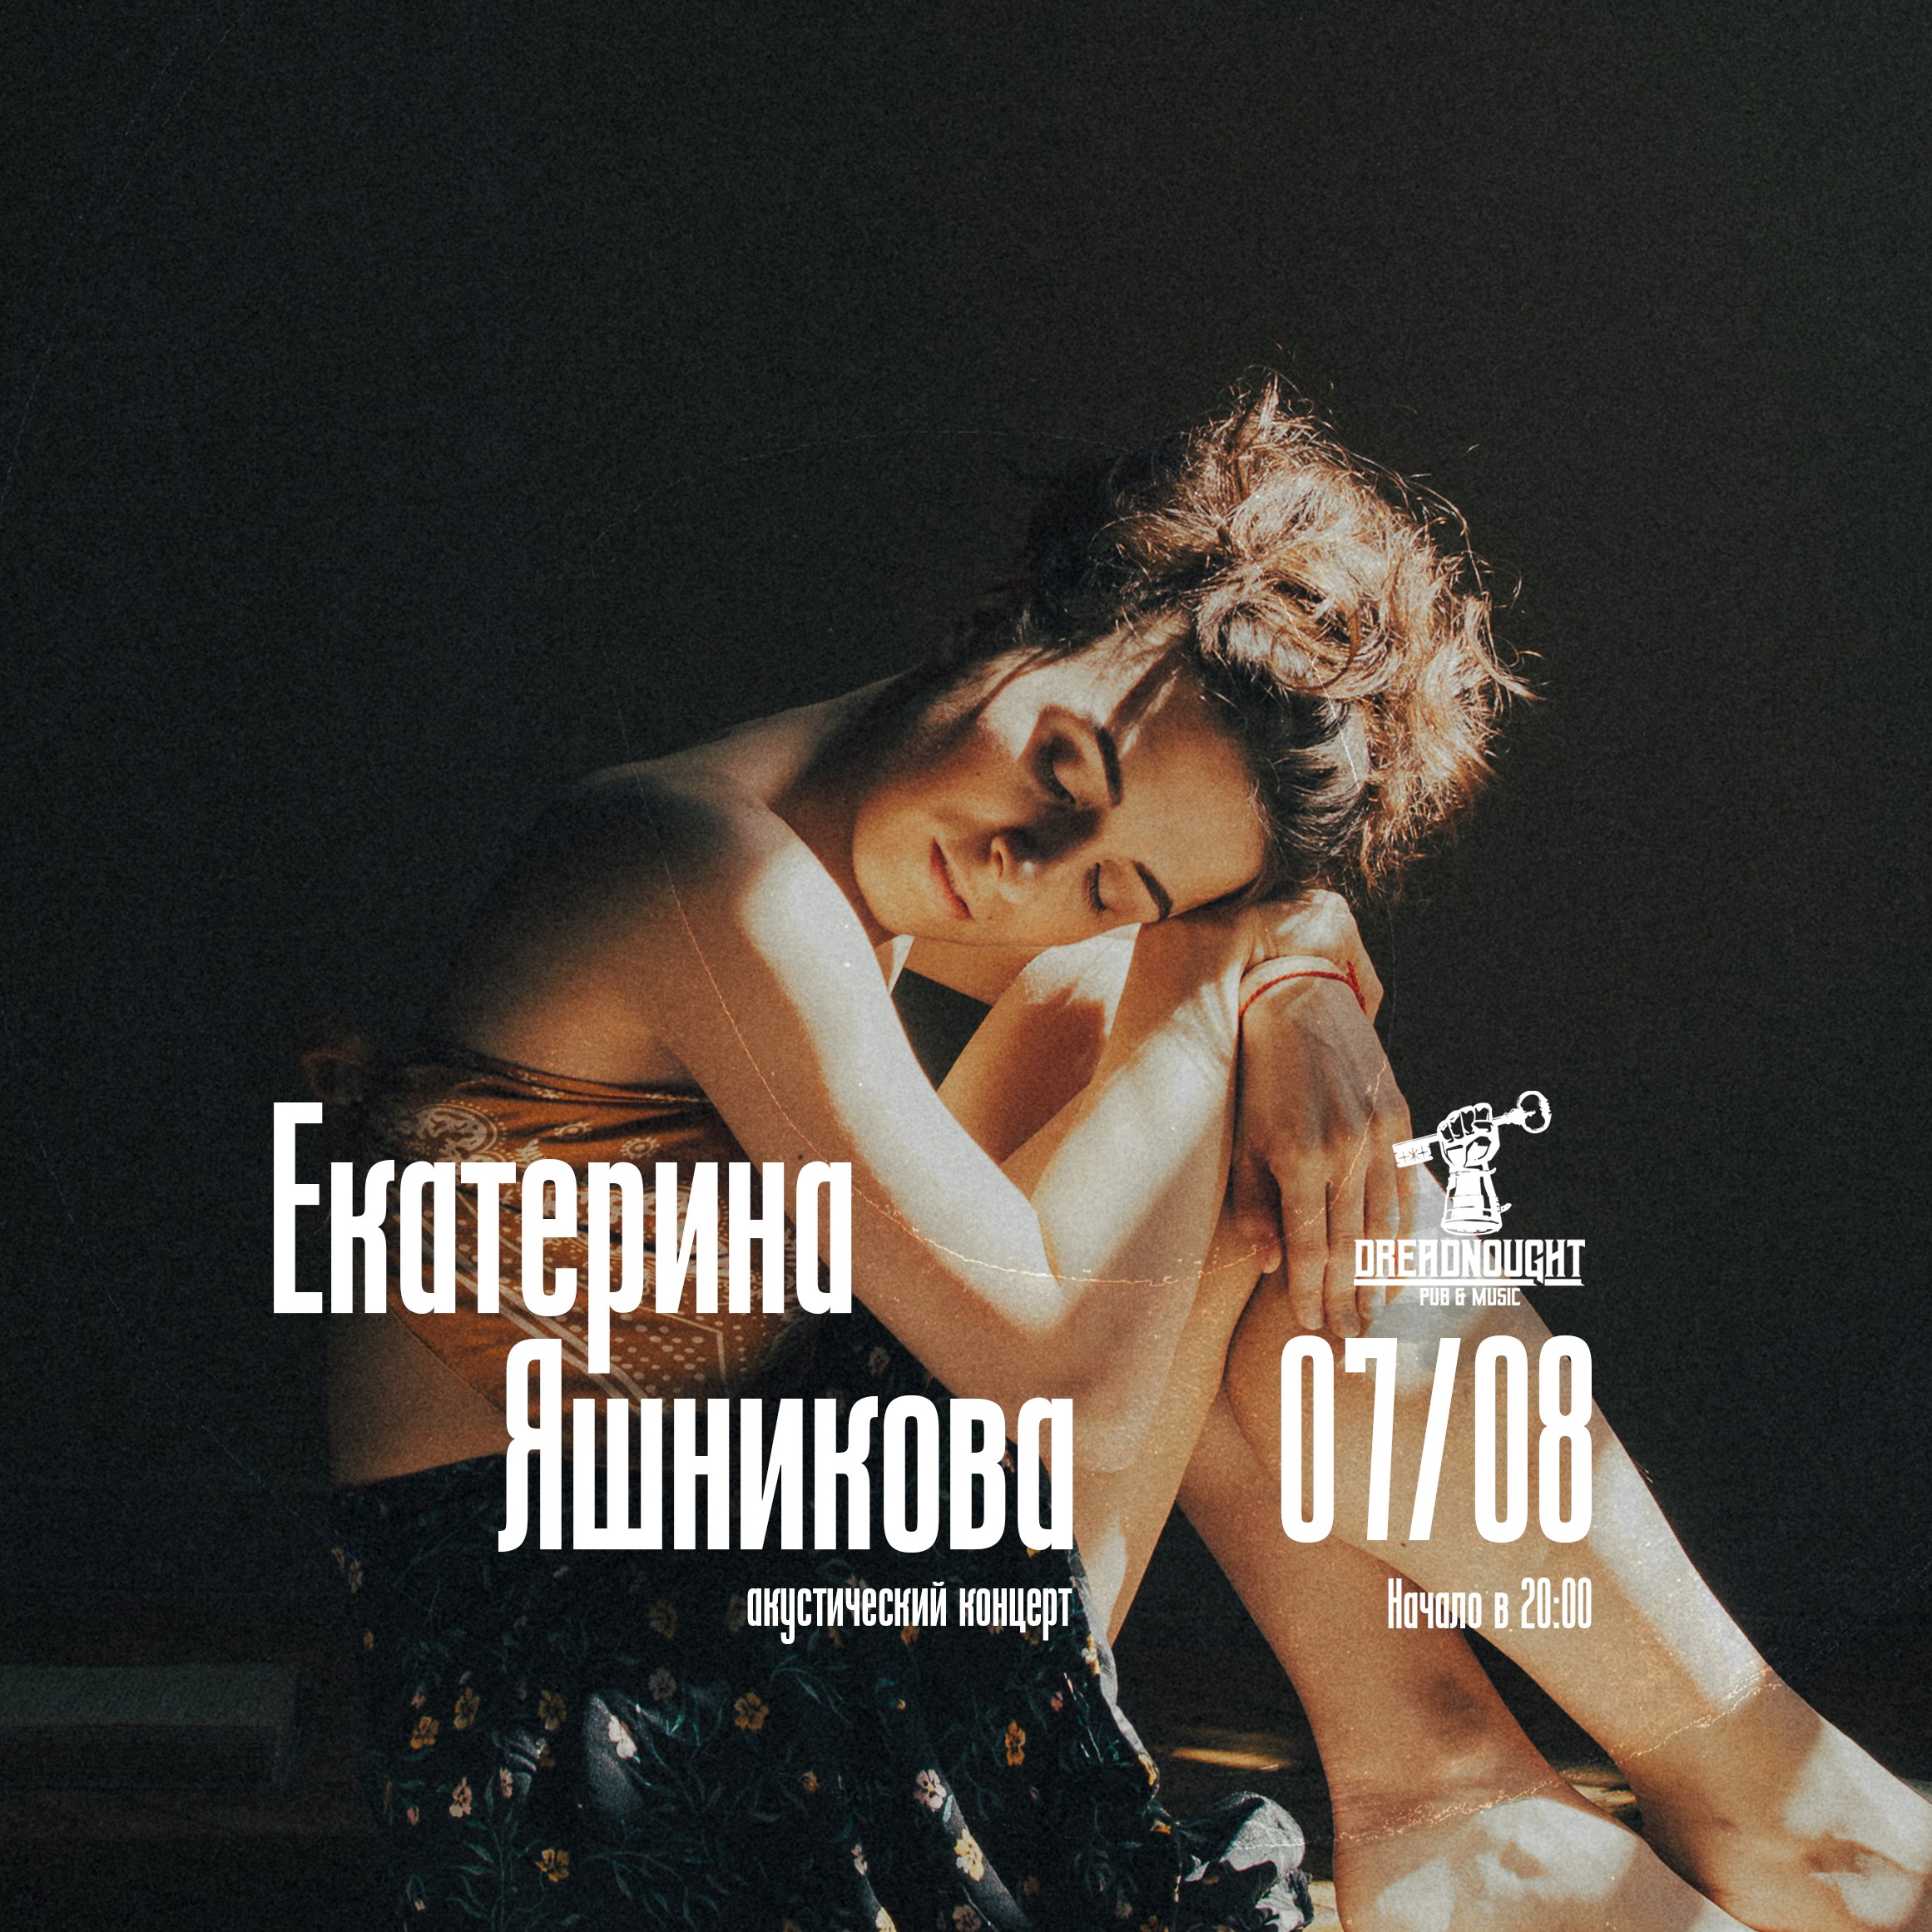 Концерт: Екатерина Яшникова